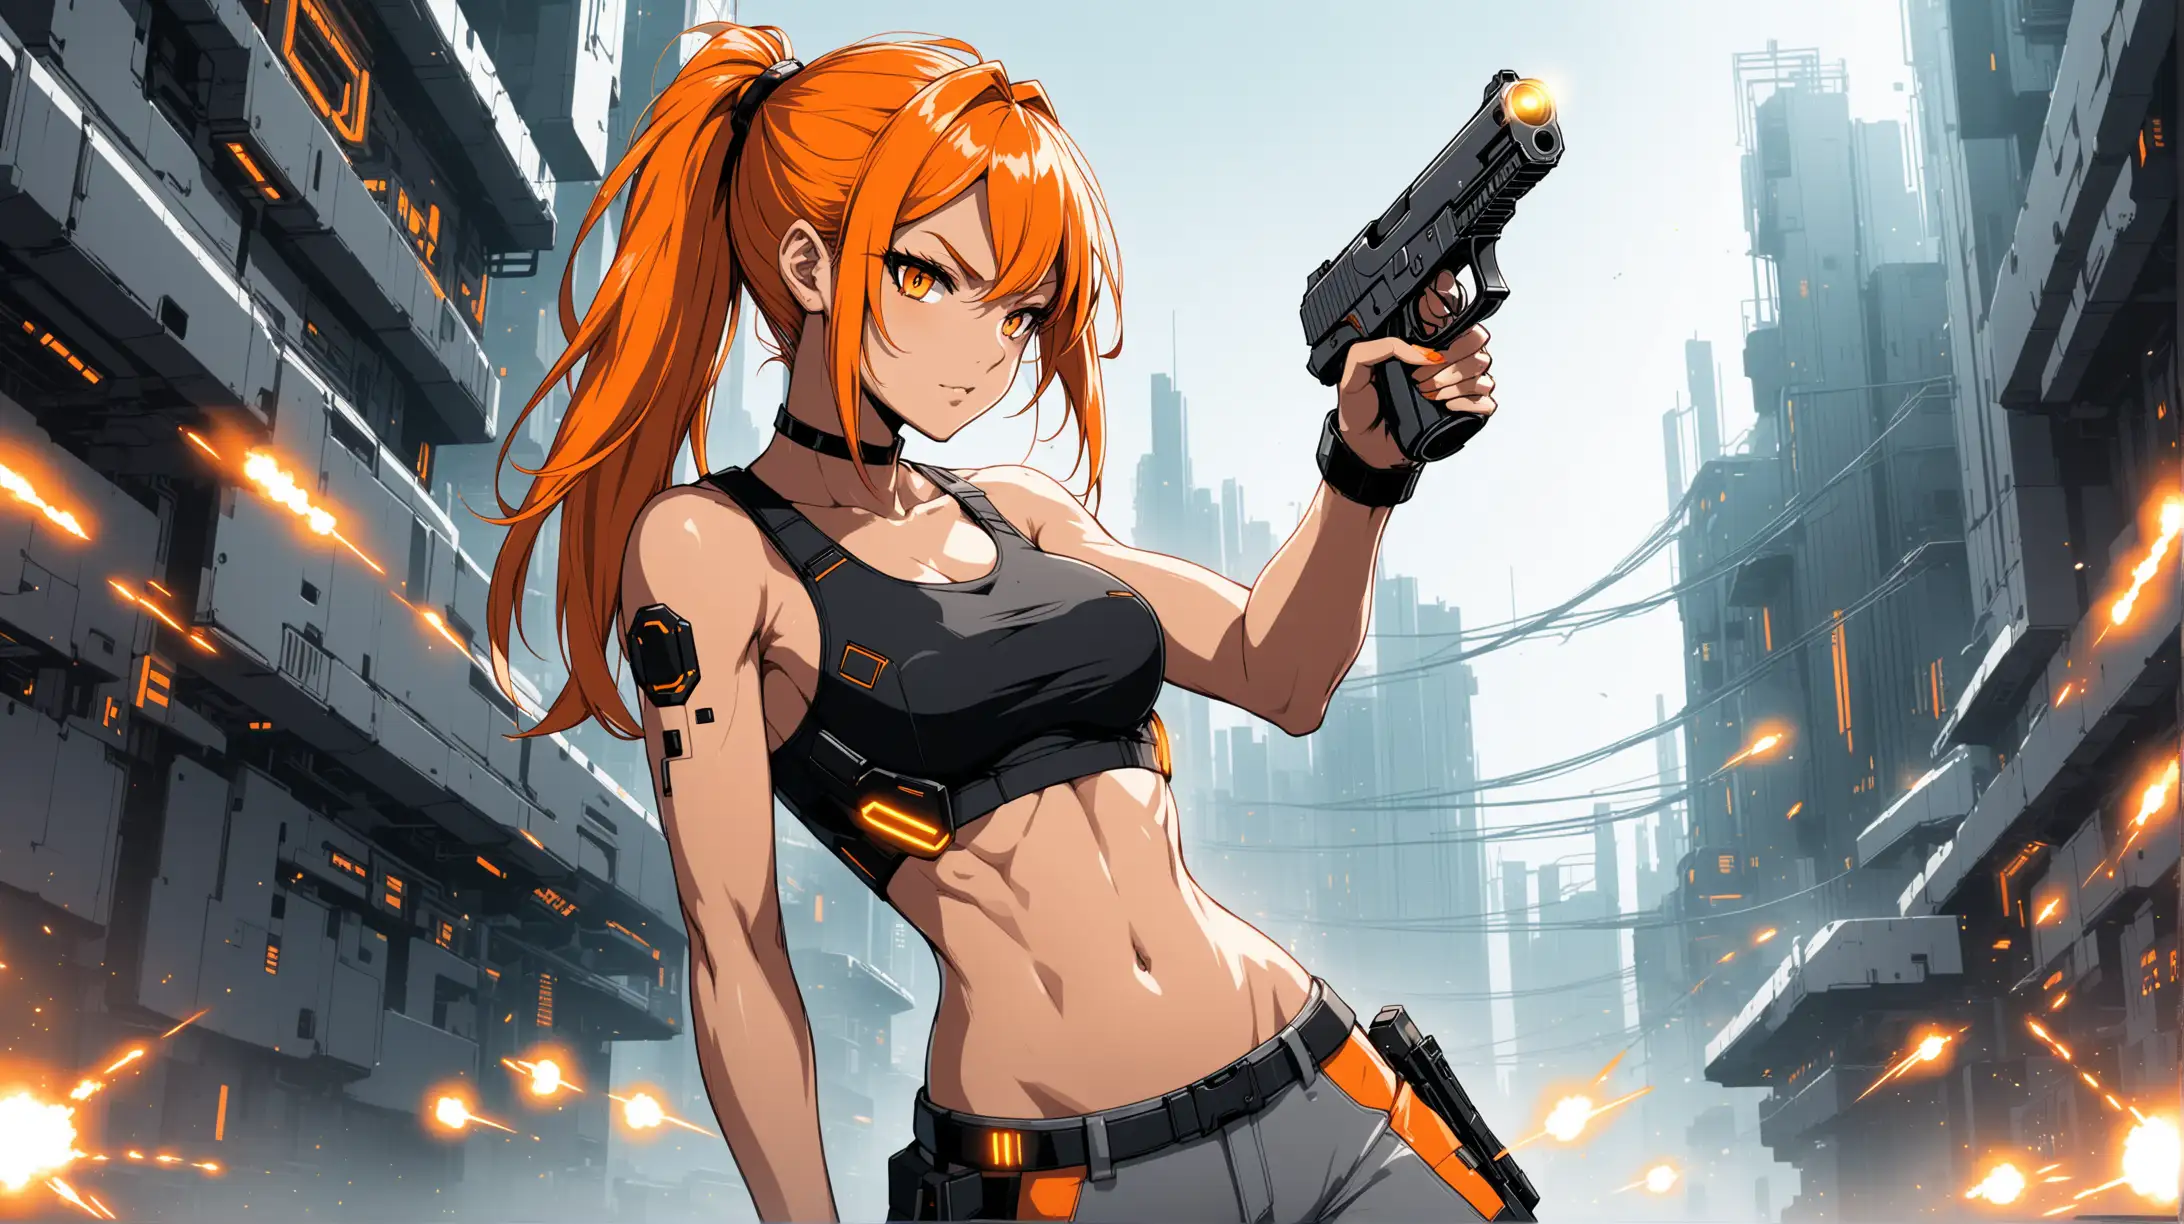 Fierce Anime Cyberpunk Heroine with Orange Ponytail Firing Handguns in Futuristic Town